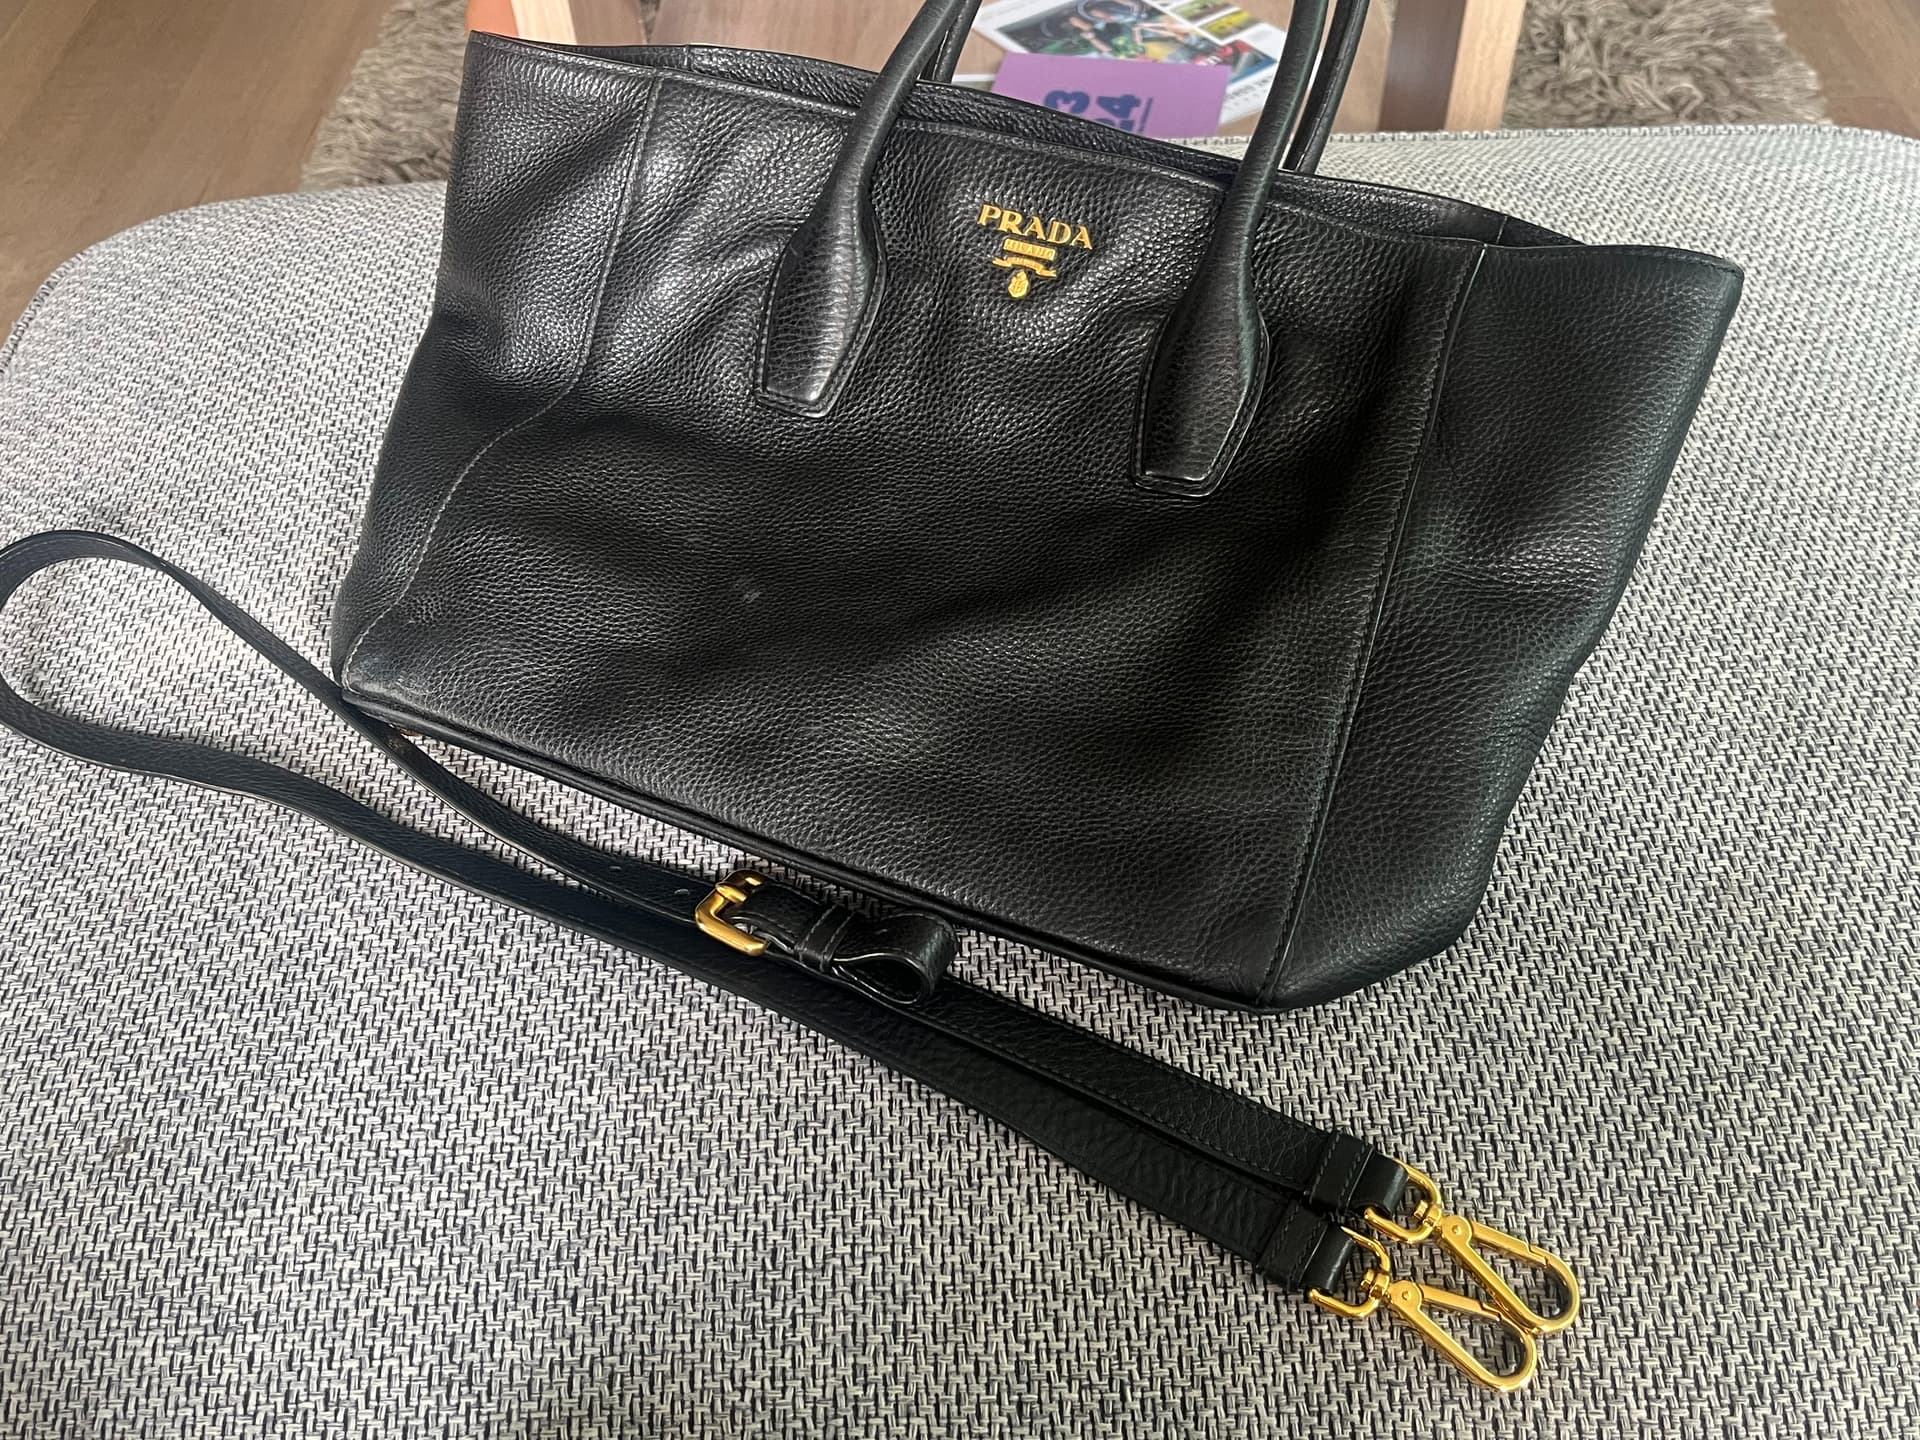 Prada Large black leather Tote Bag £500 - SL Pre-Loved Marketplace